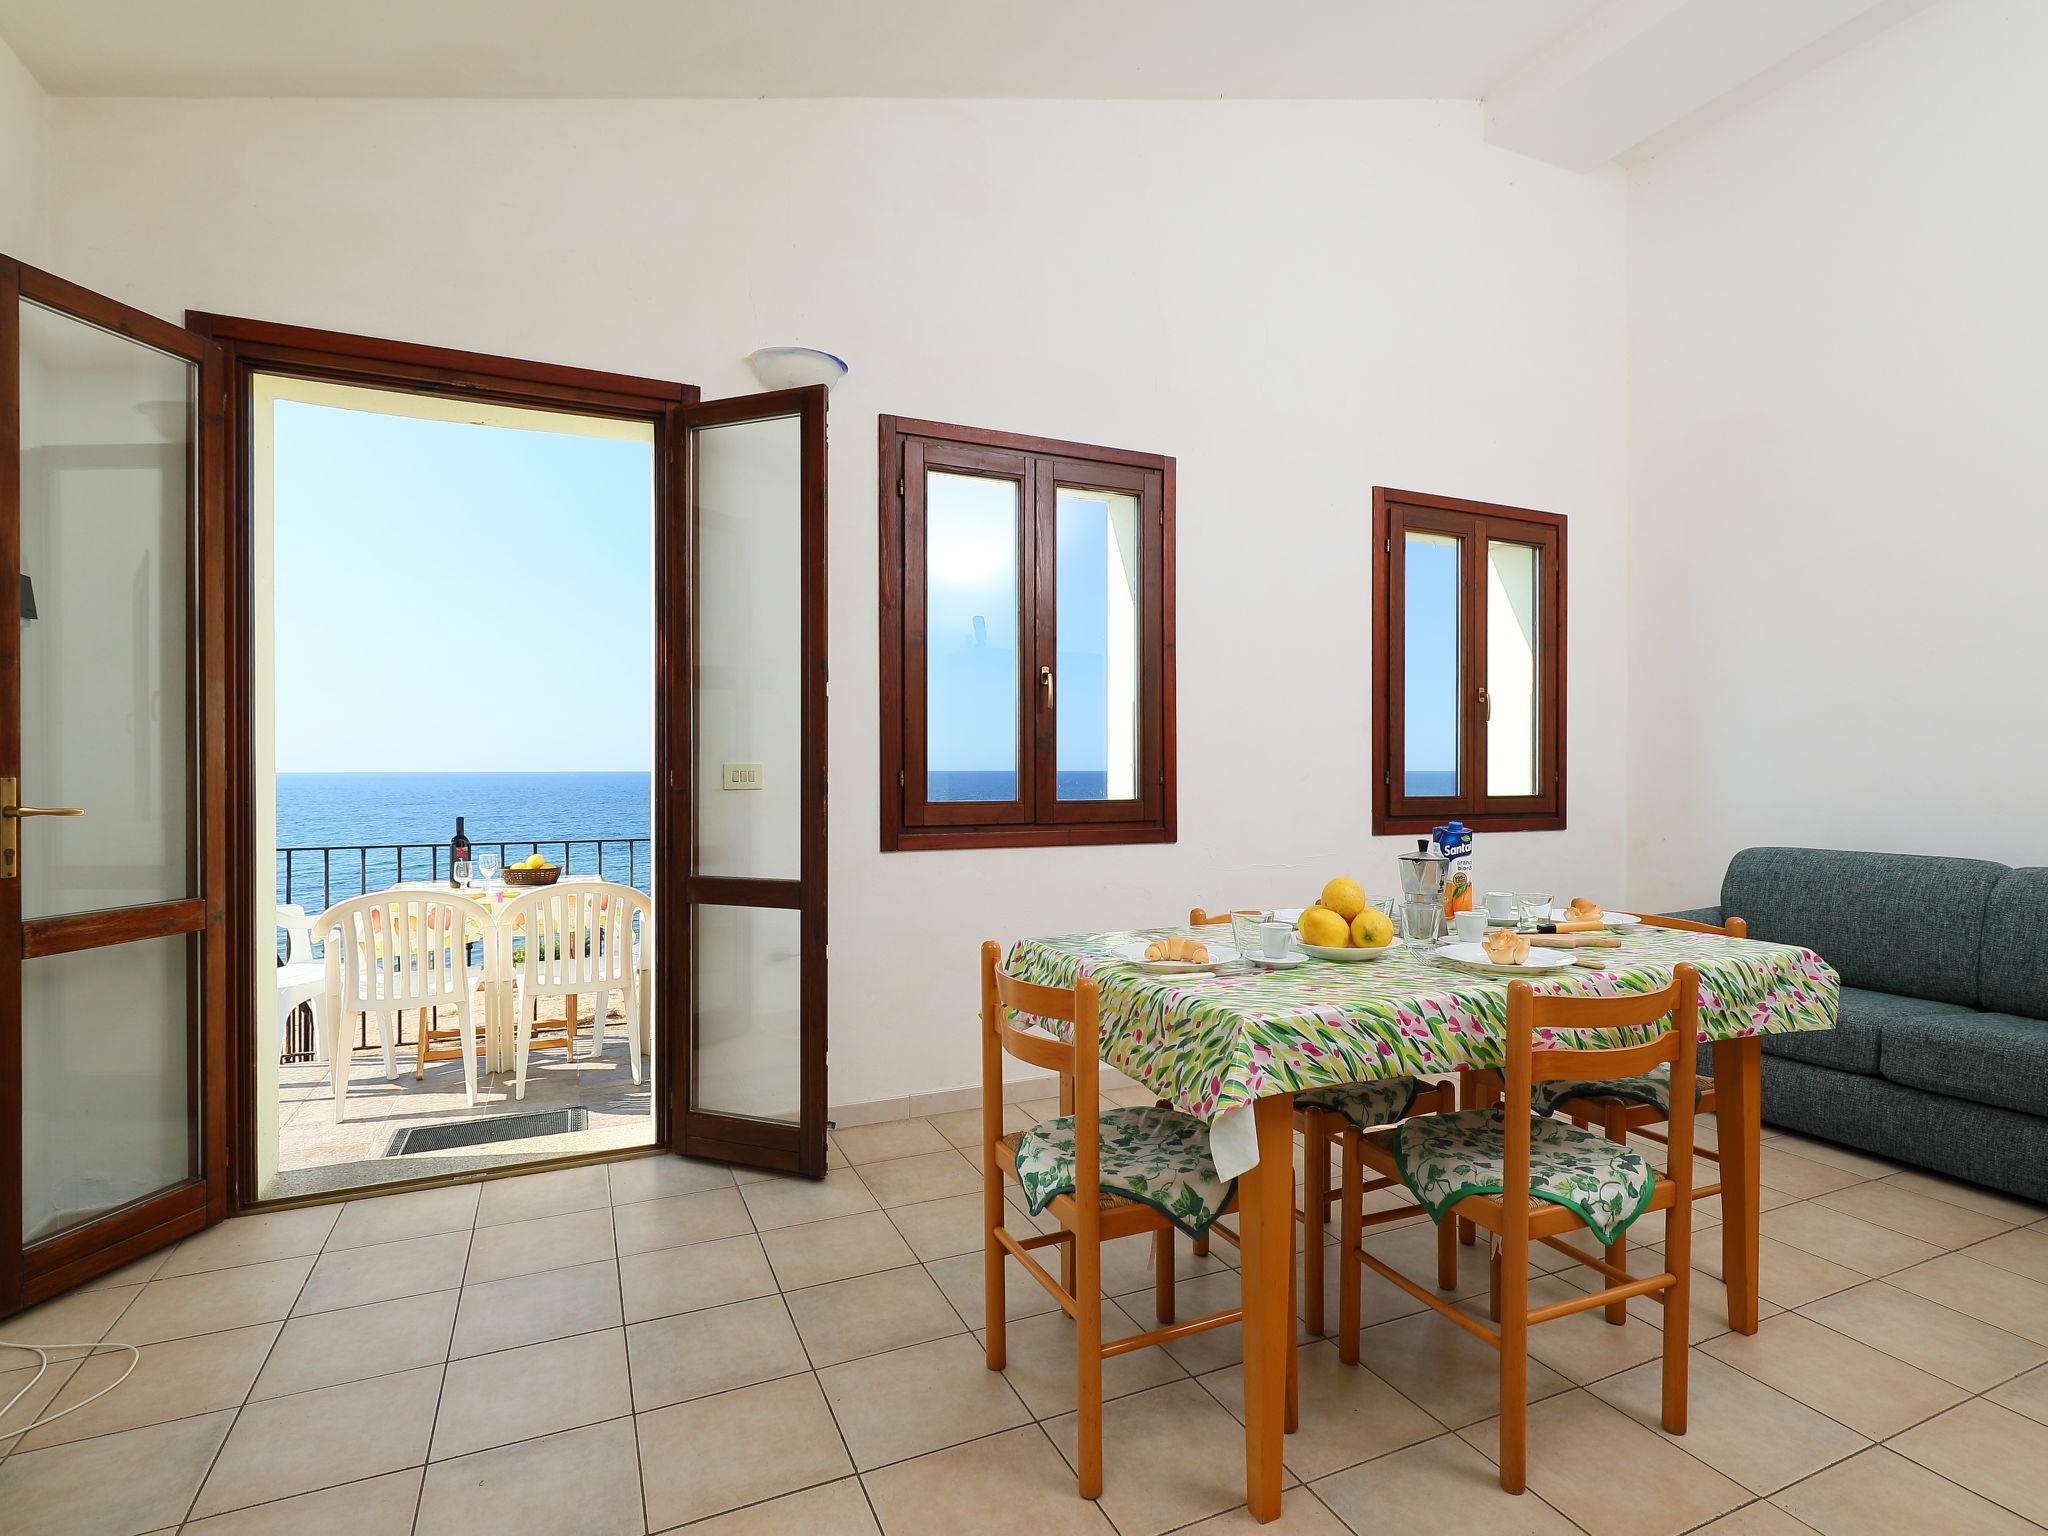 Photo 5 - Appartement de 1 chambre à Valledoria avec vues à la mer